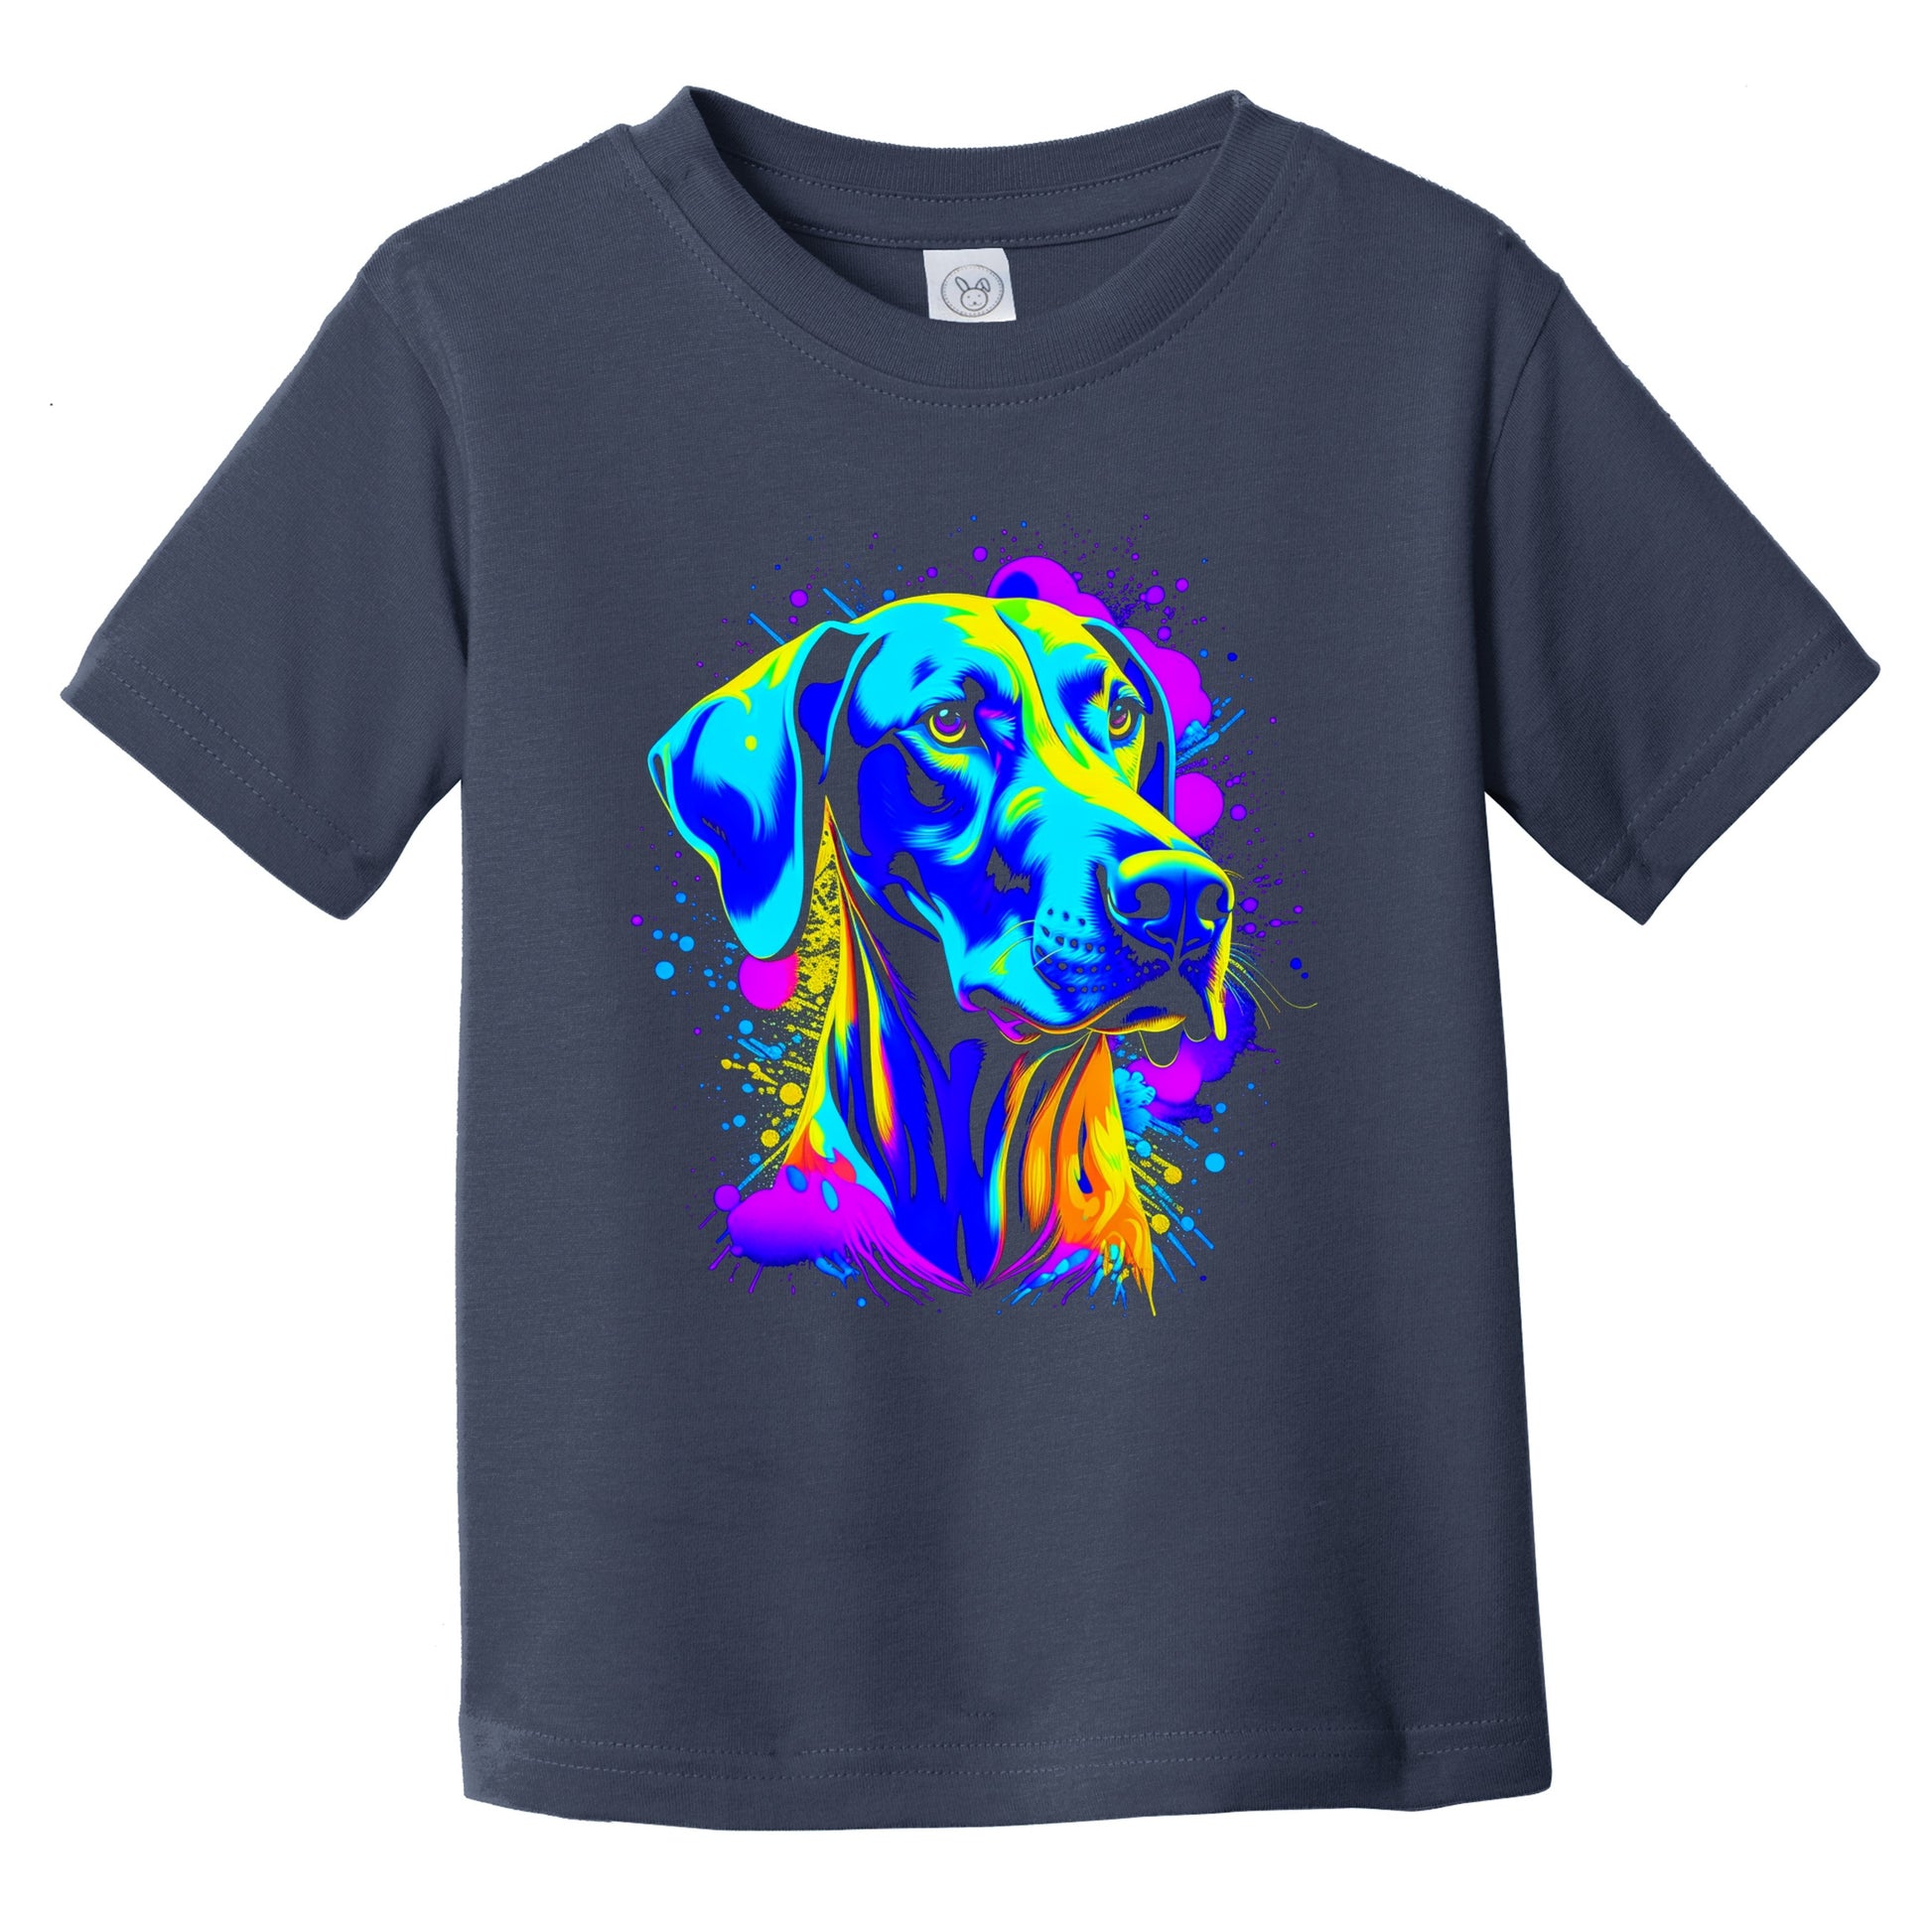 Colorful Bright Great Dane Vibrant Psychedelic Dog Art Infant Toddler T-Shirt